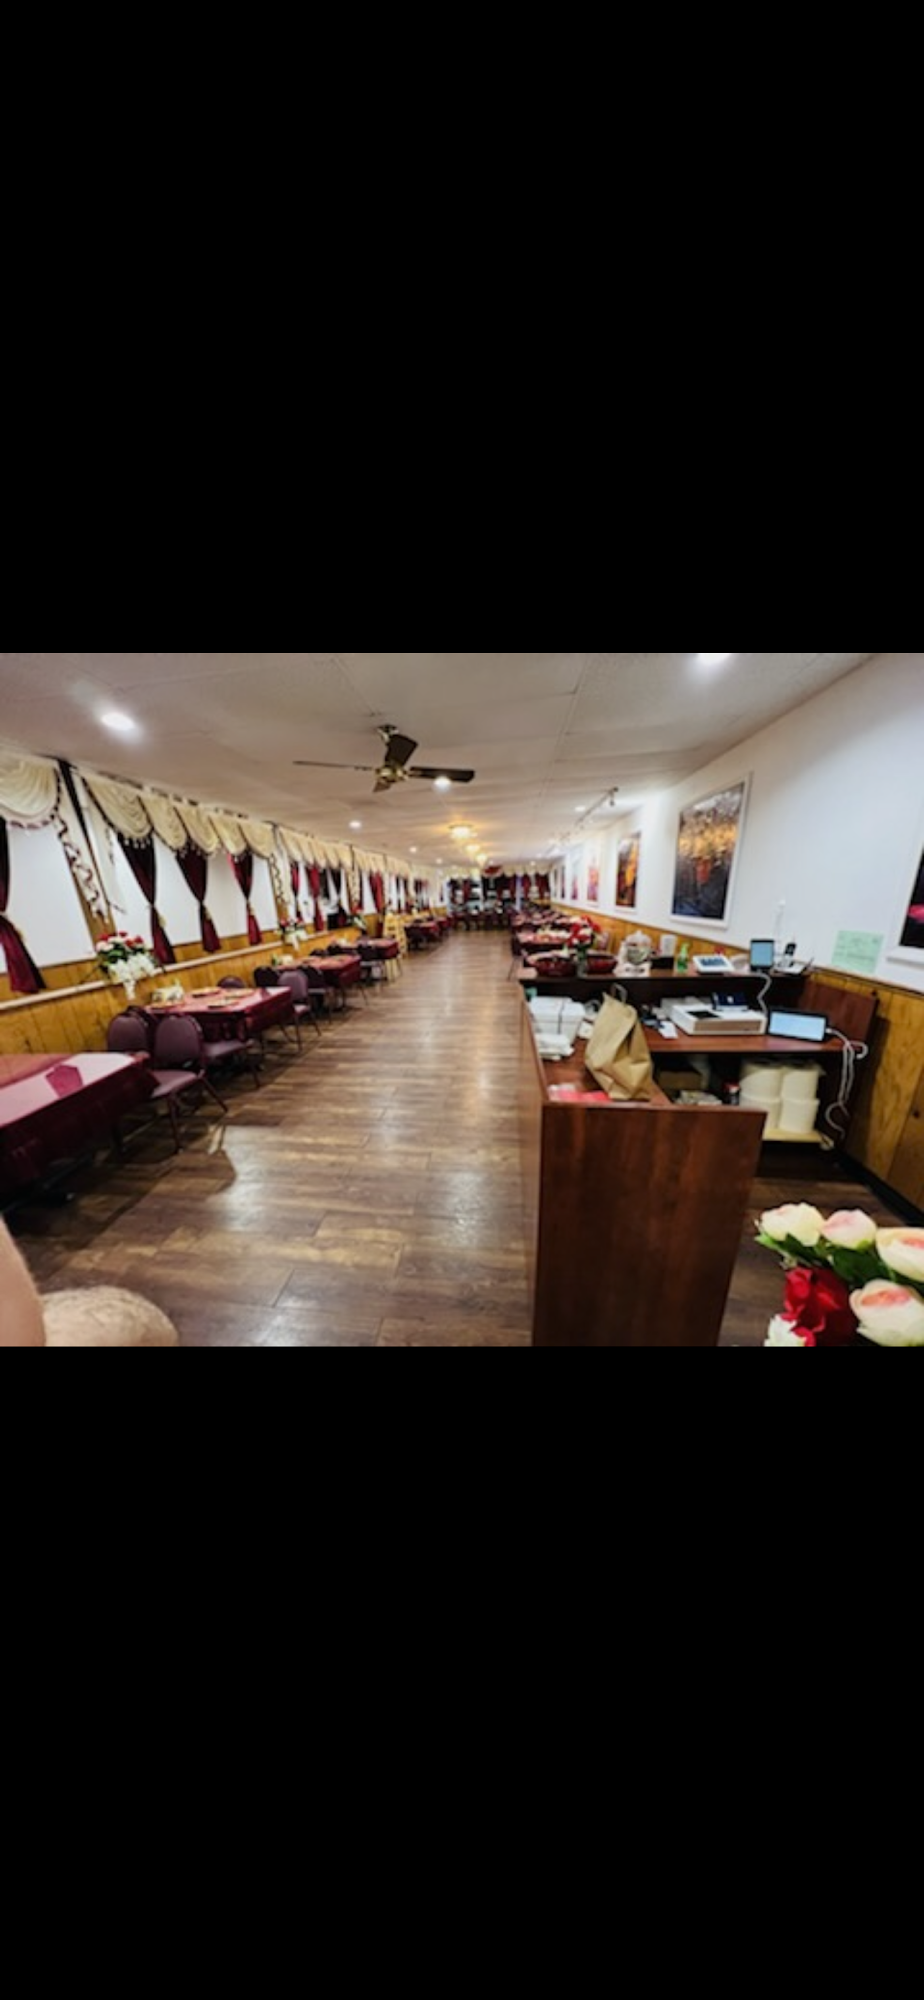 Antique Indian Restaurant Bar & Grills